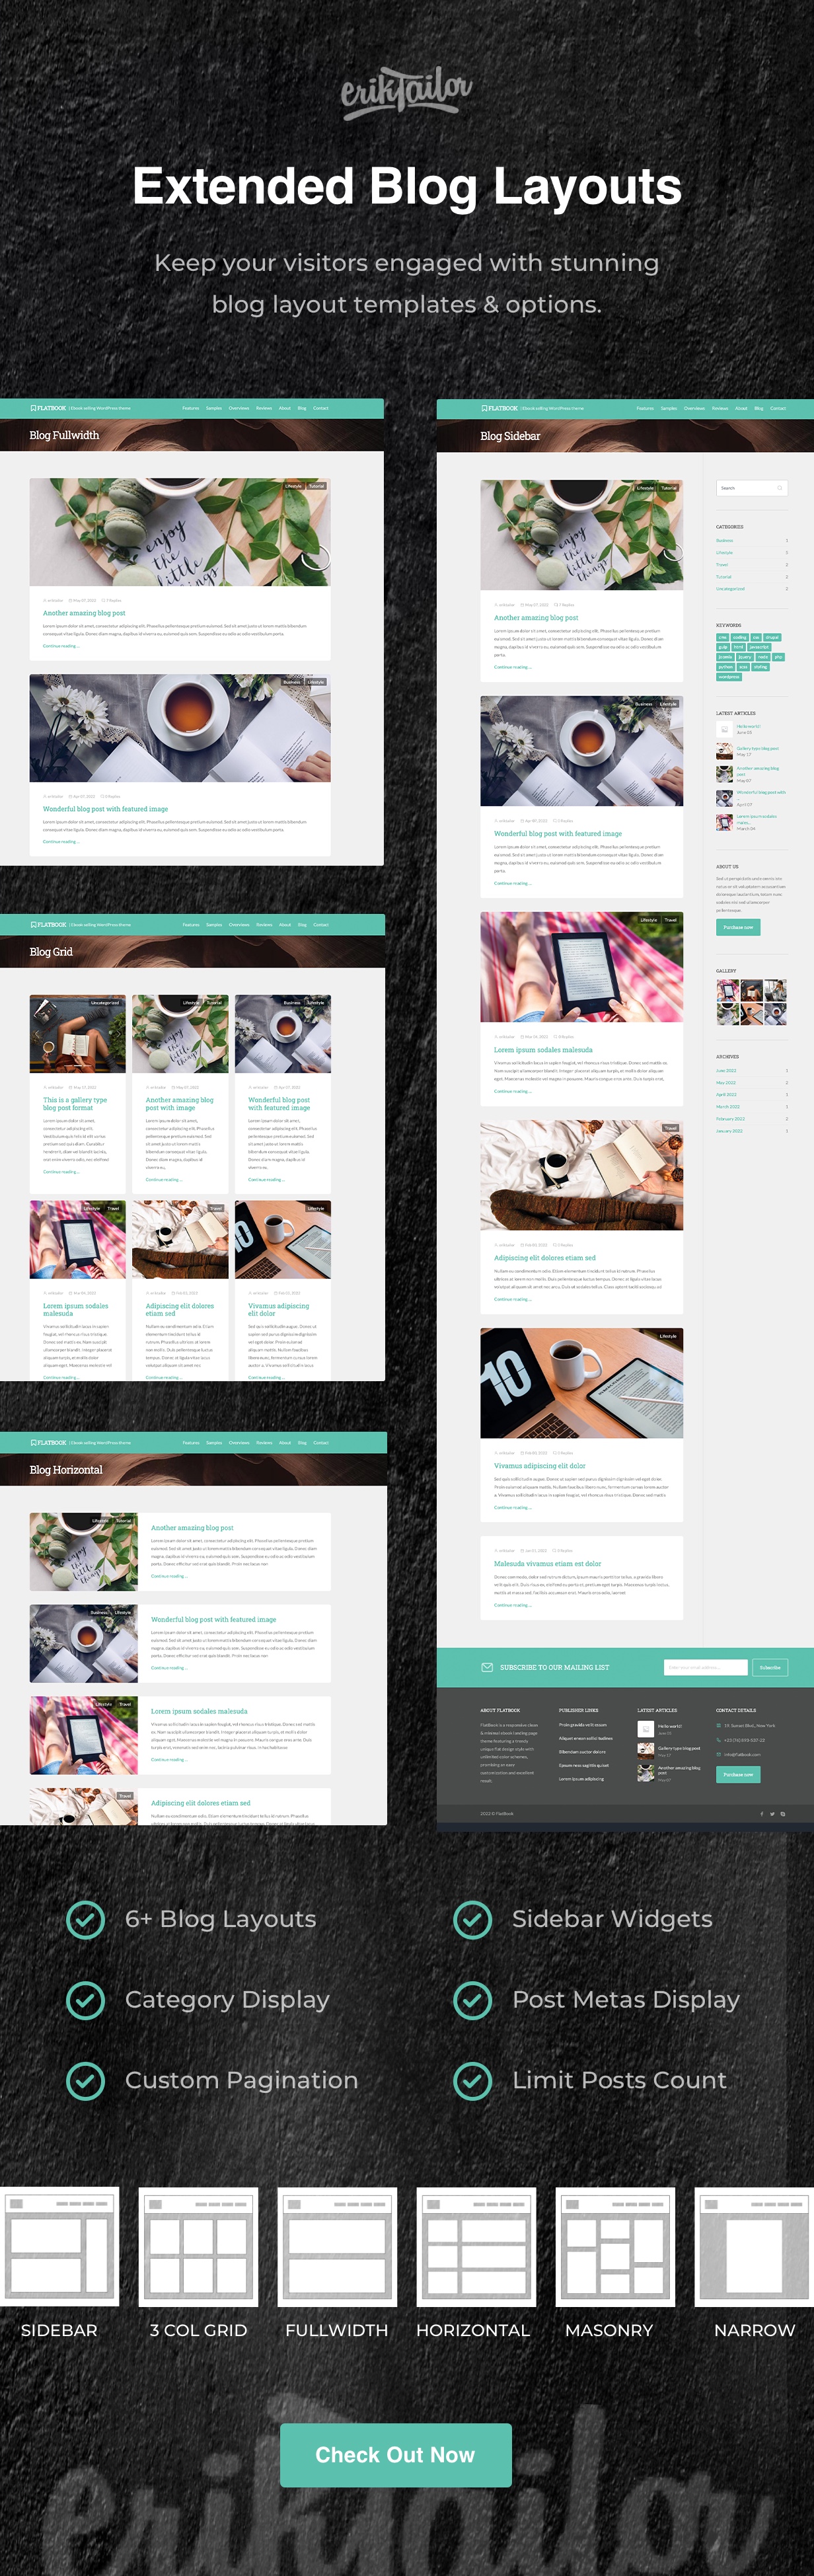 blog layouts2 - FlatBook - Ebook Selling WordPress Theme